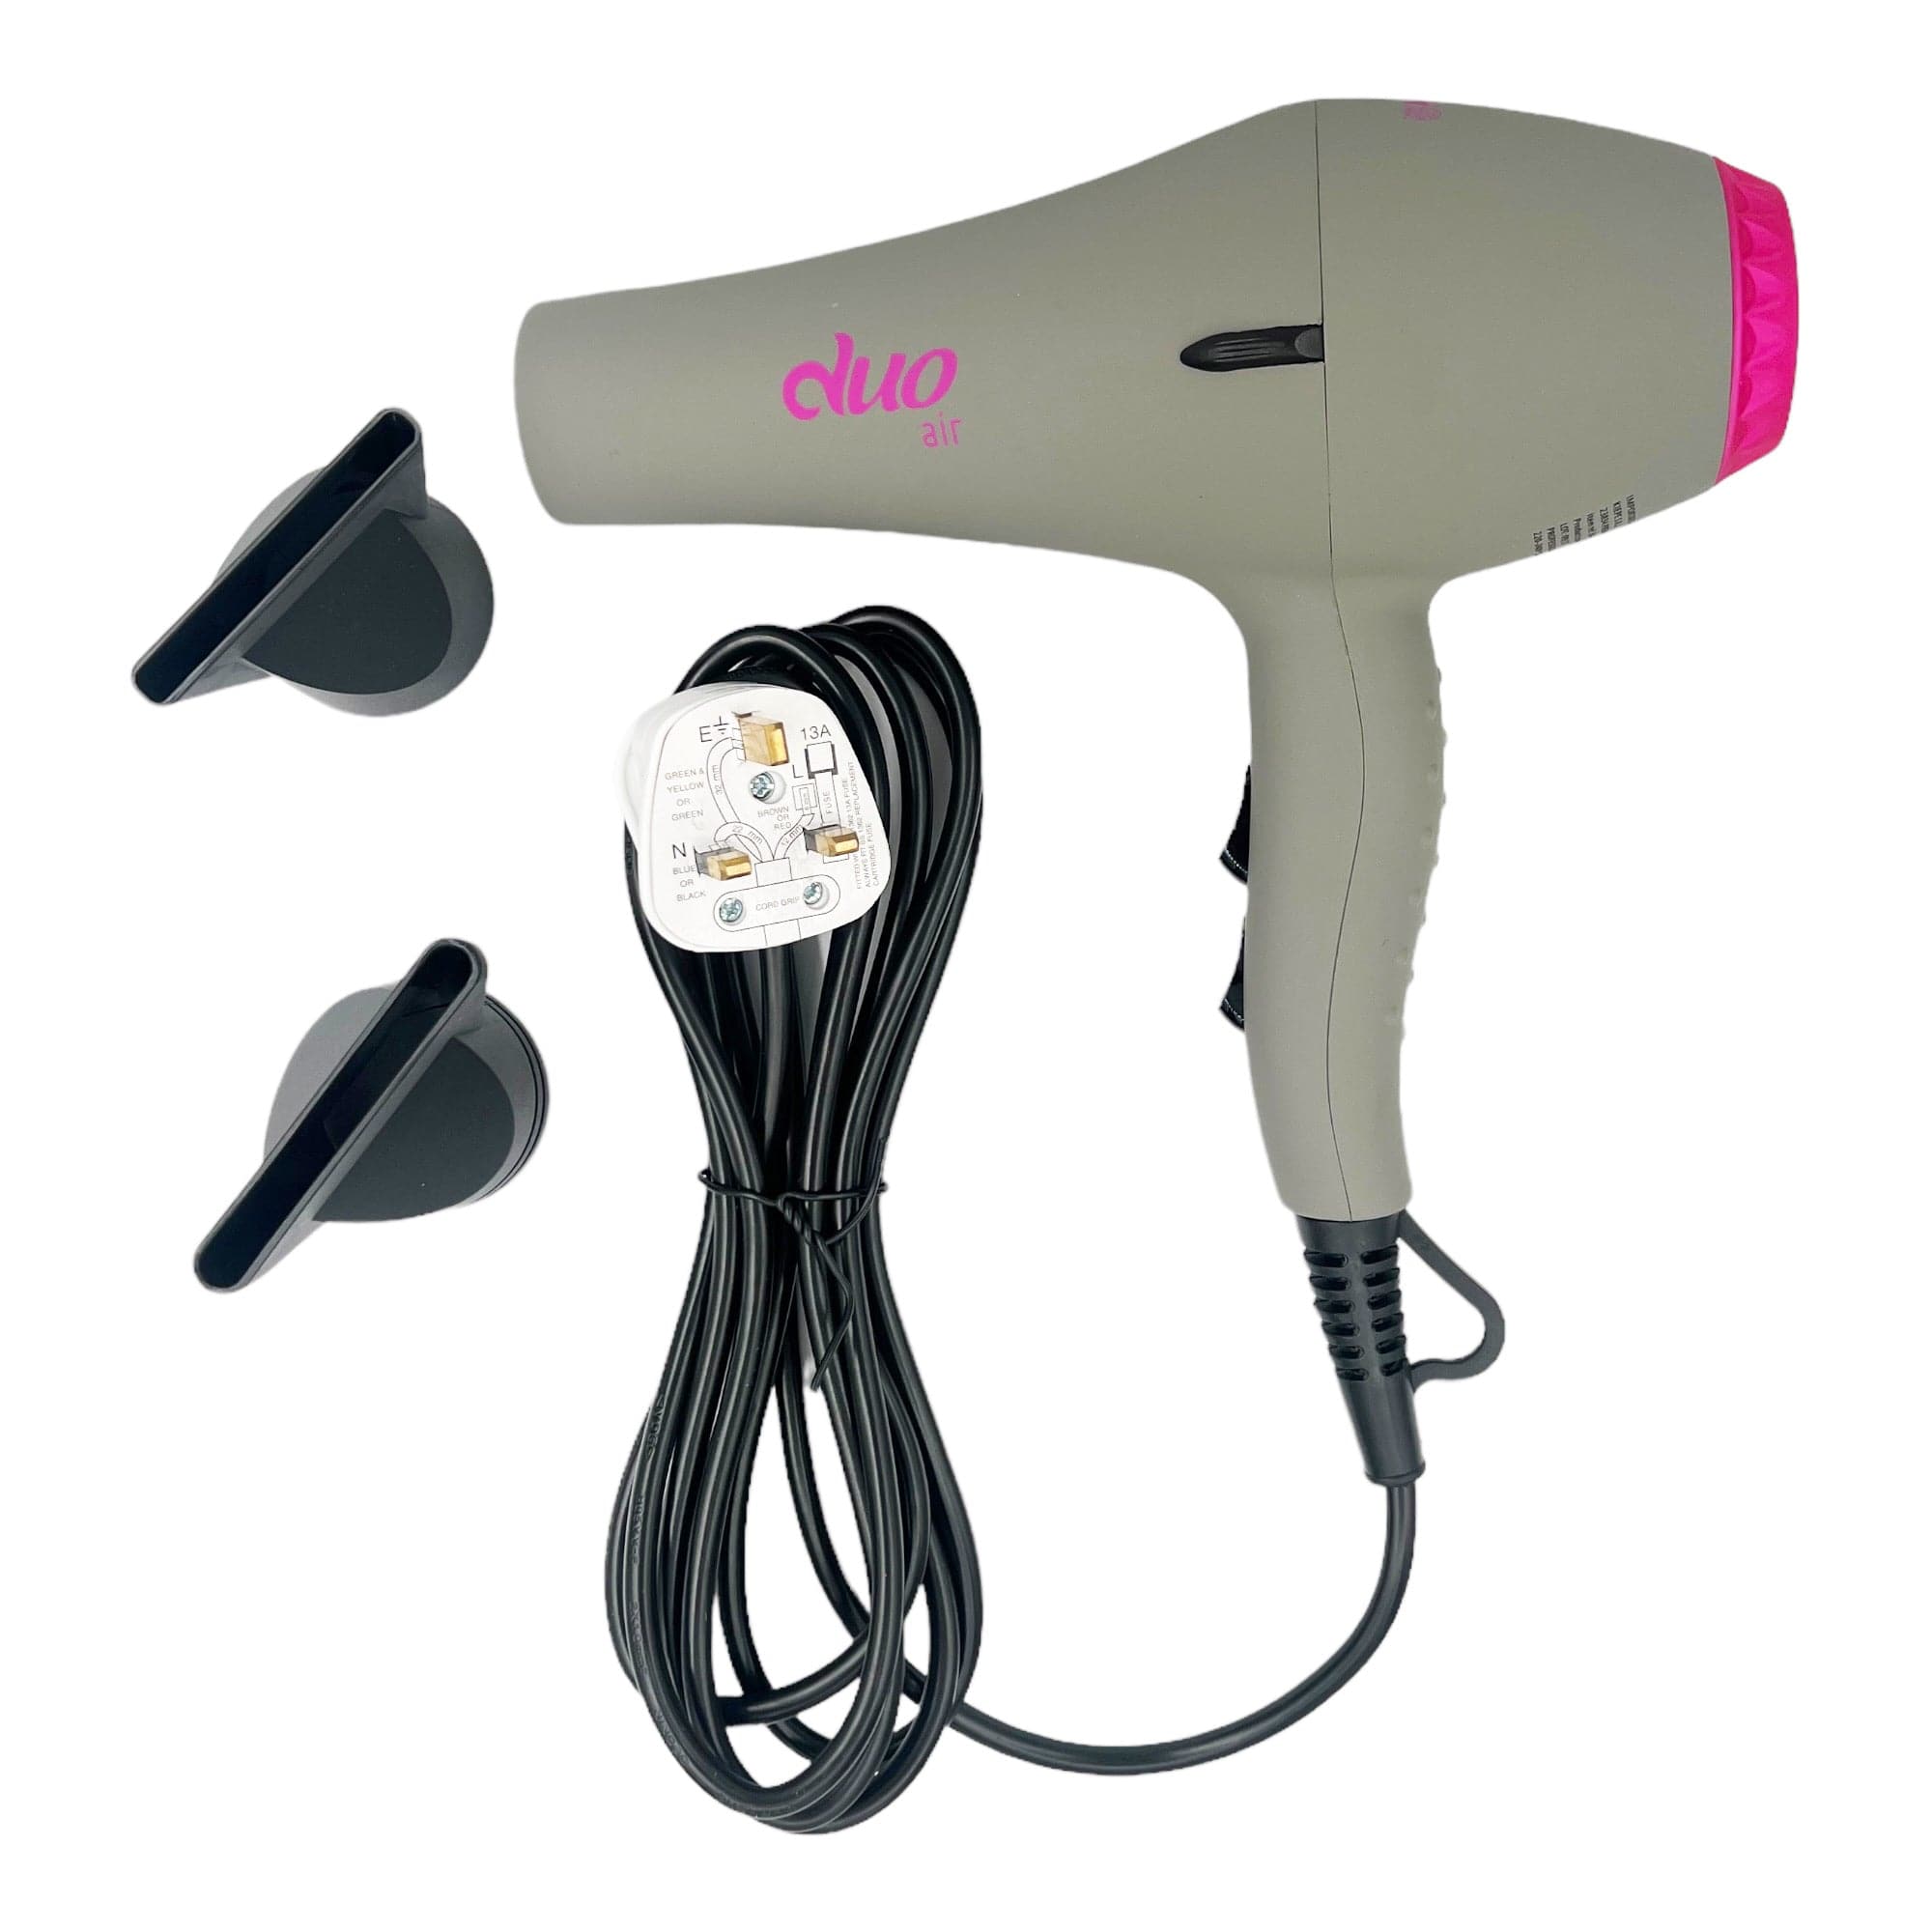 Kiepe -  Dou Air Hair Dryer 2400W Grey-Pink